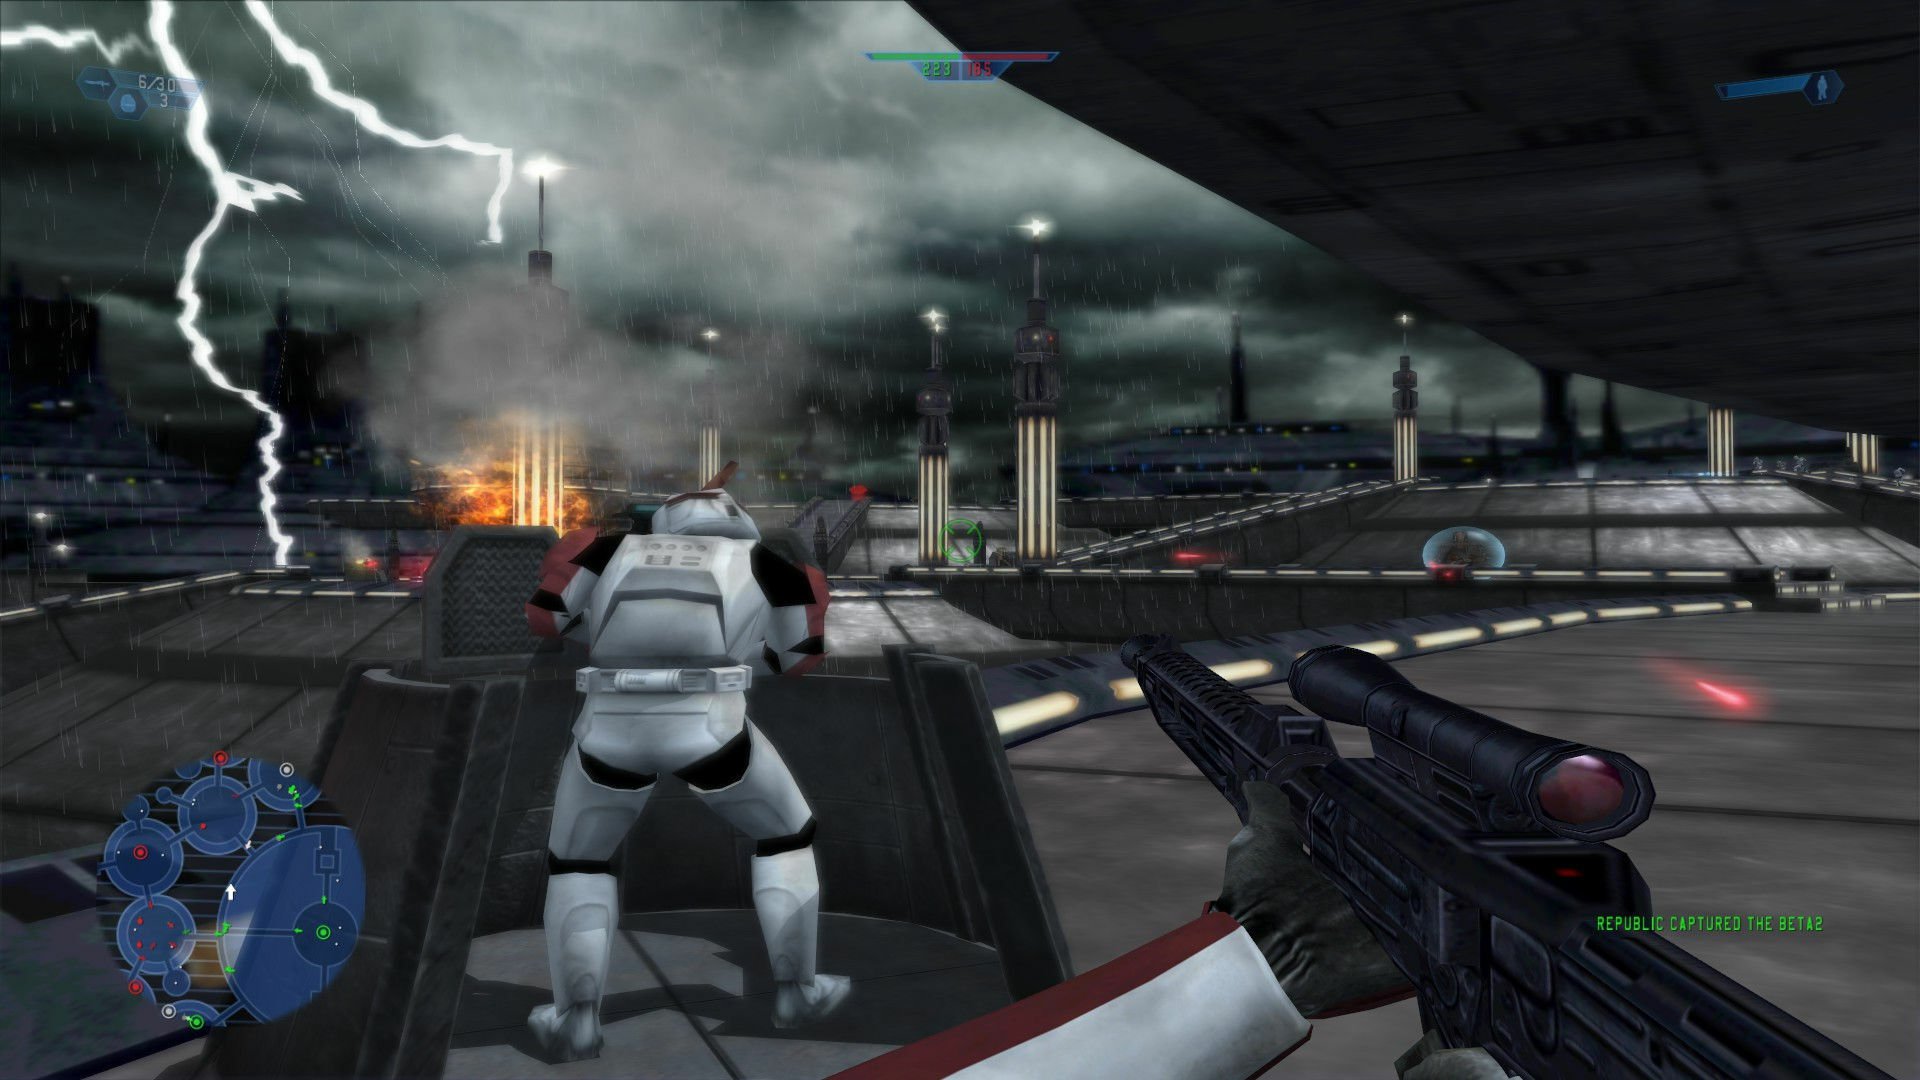 Скриншот 1 к игре Star Wars Battlefront v1.3.7.4 [GOG] (2004)